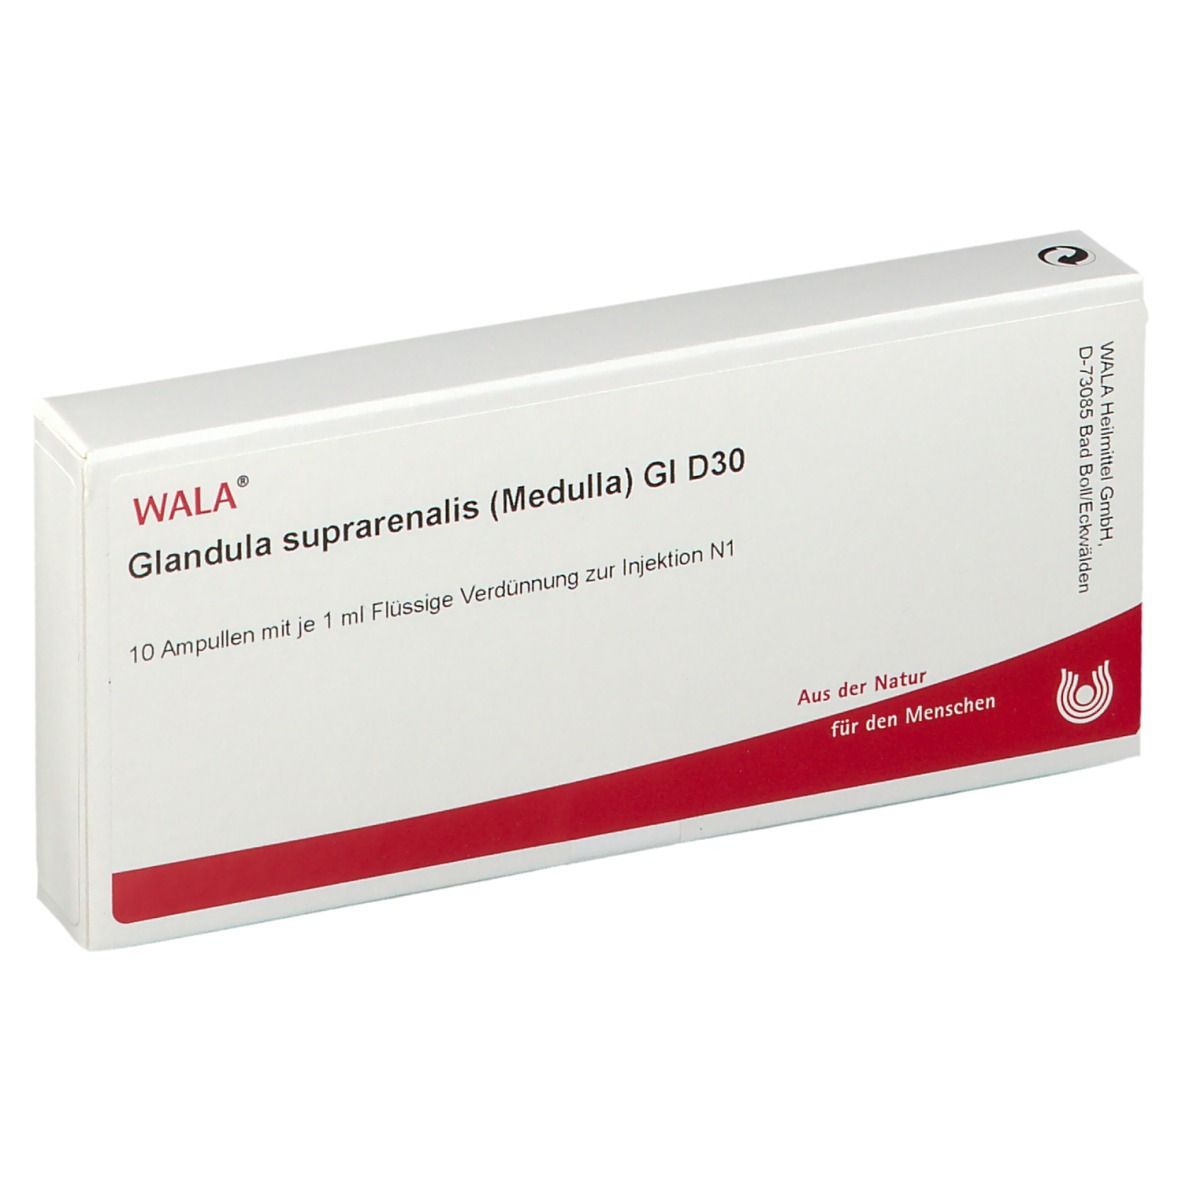 WALA® Glandula suprarenalis Medulla Gl D 30